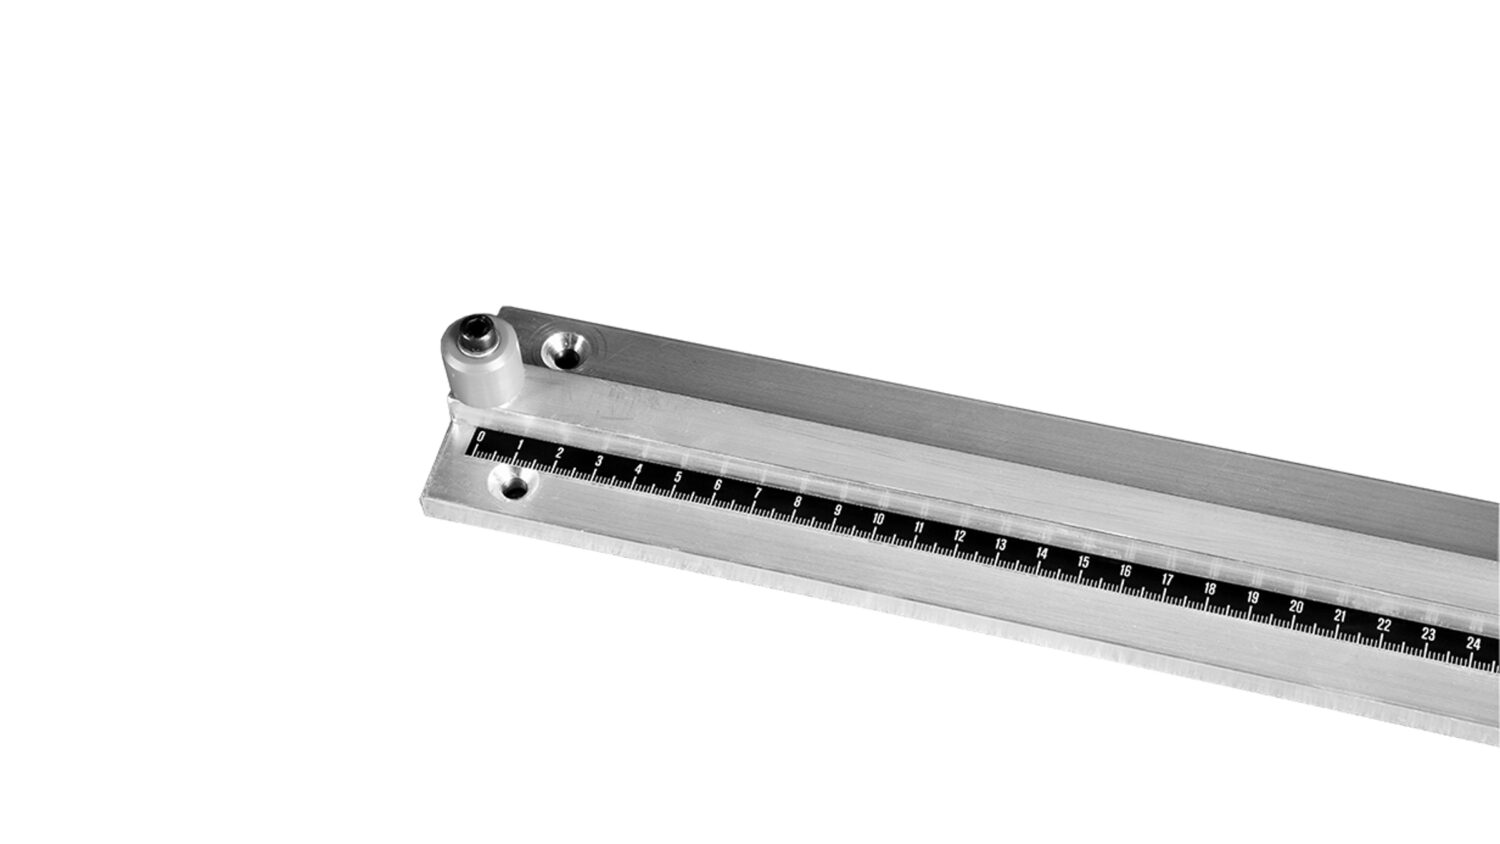 FOBA milimetre scale for floor rail for a studio stand (Vermessung, Halterung, Positionierung)